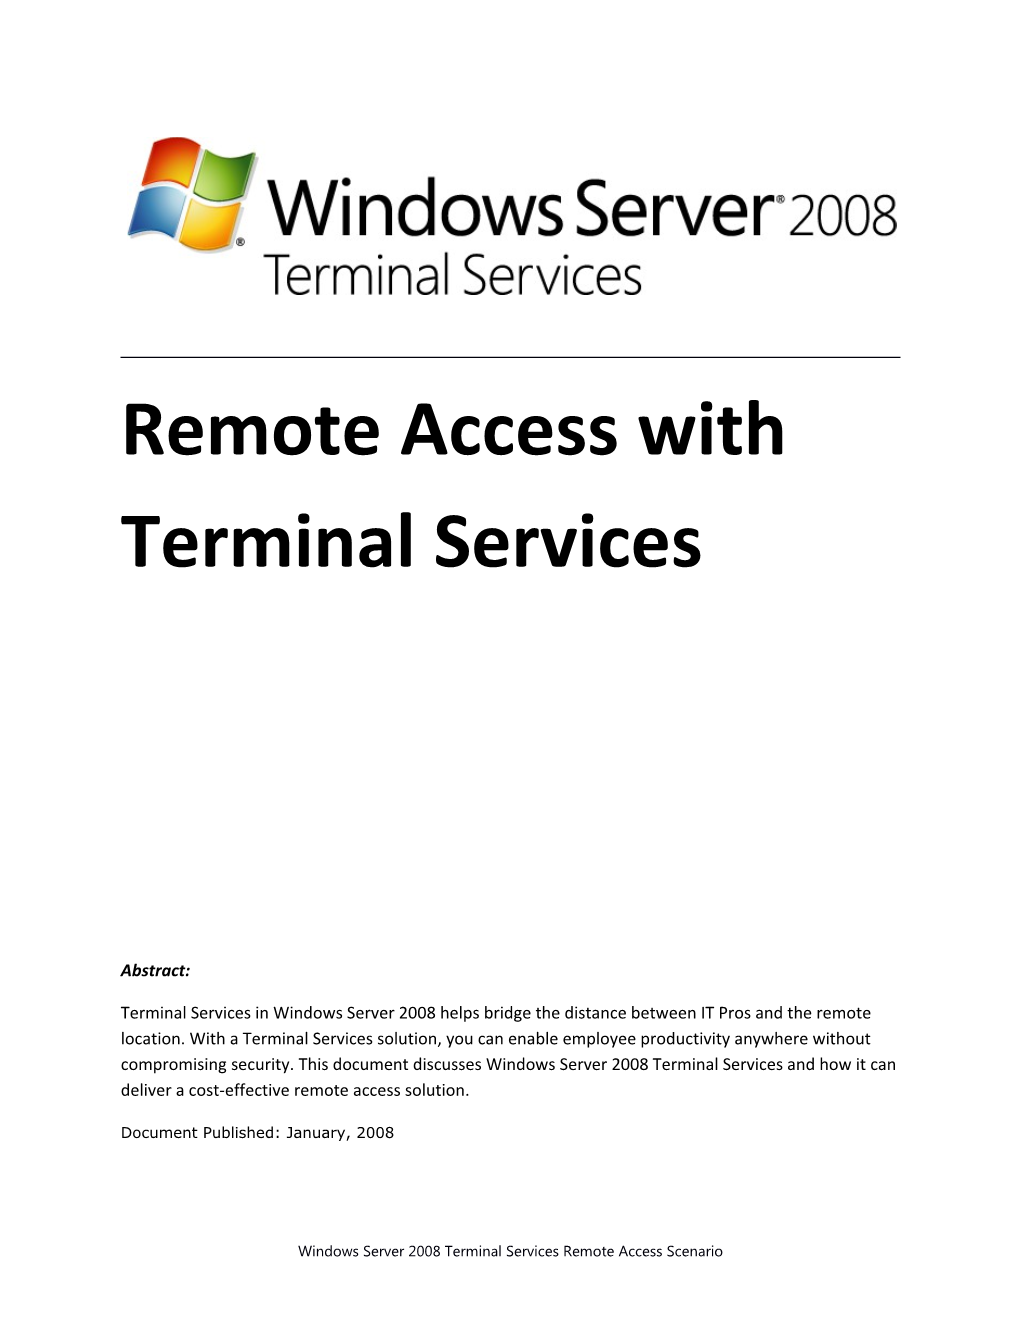 Windows Server 2008 Technical Decision Maker (TDM) White Paper - Condensed